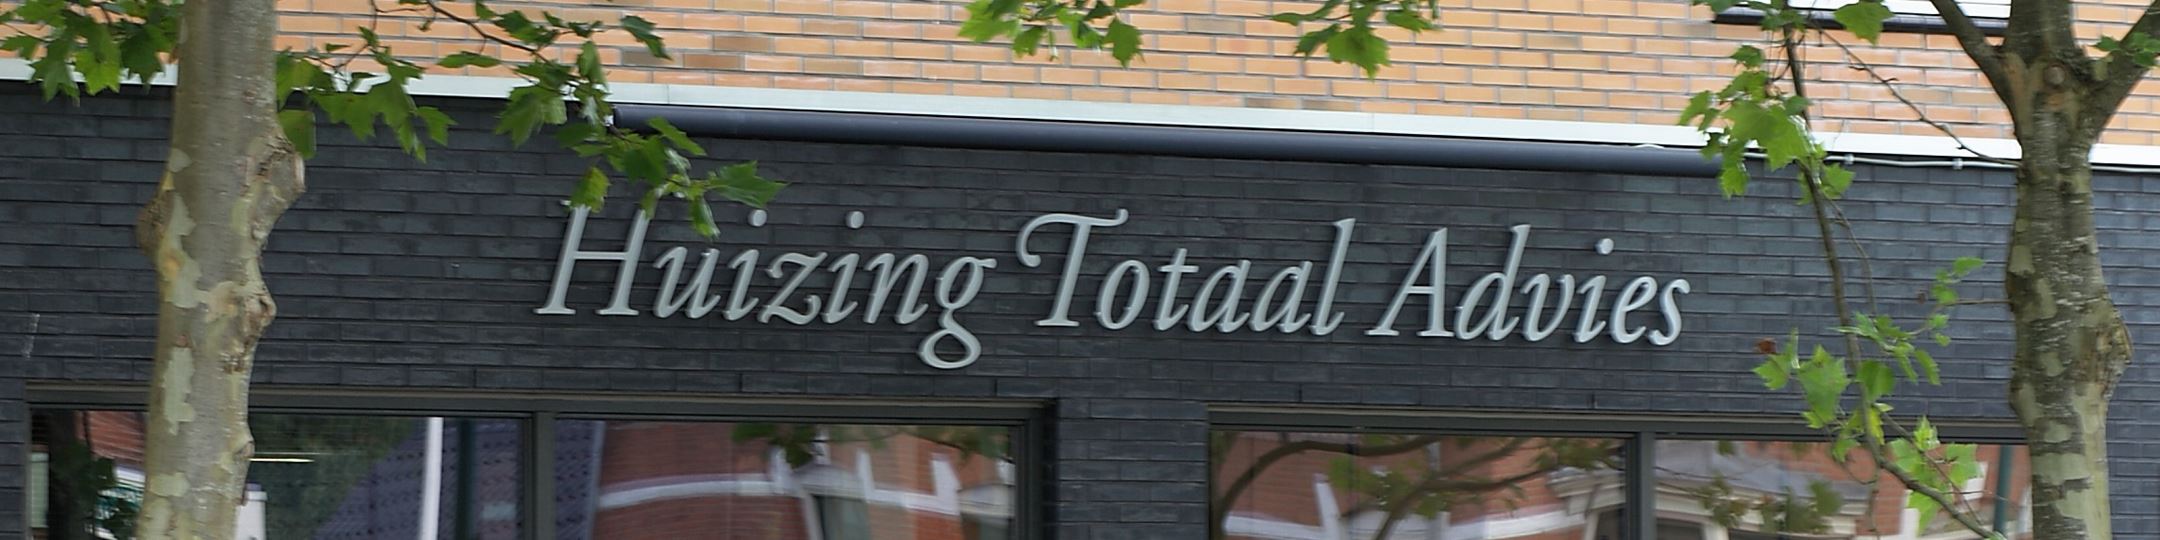 Banner Huizing Totaal Advies